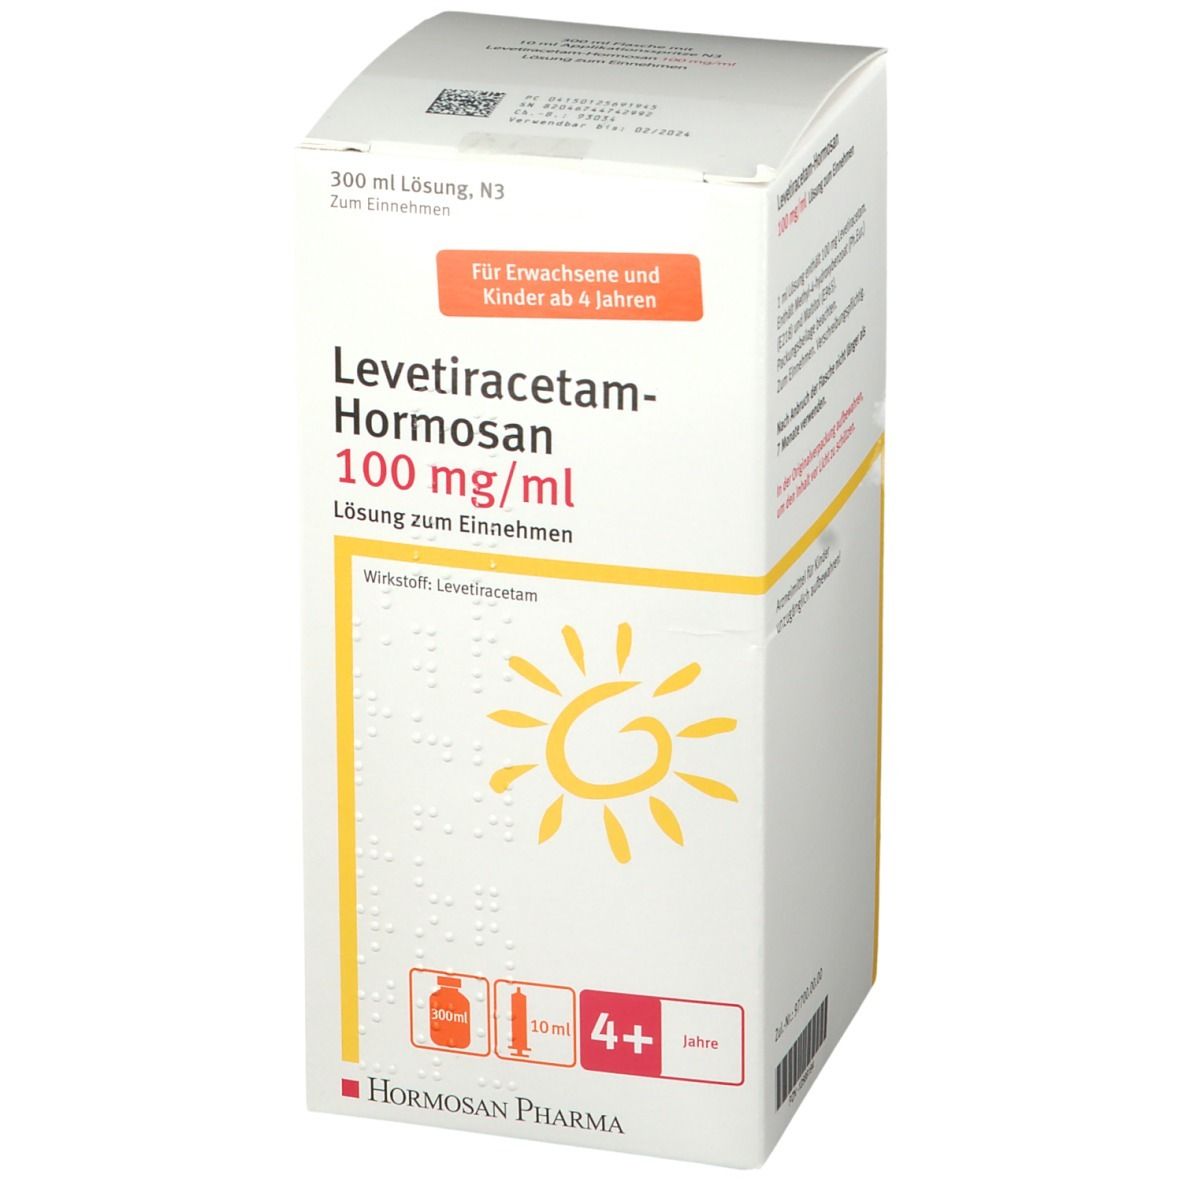 Levetiracetam-Hormosan 100 mg/ml